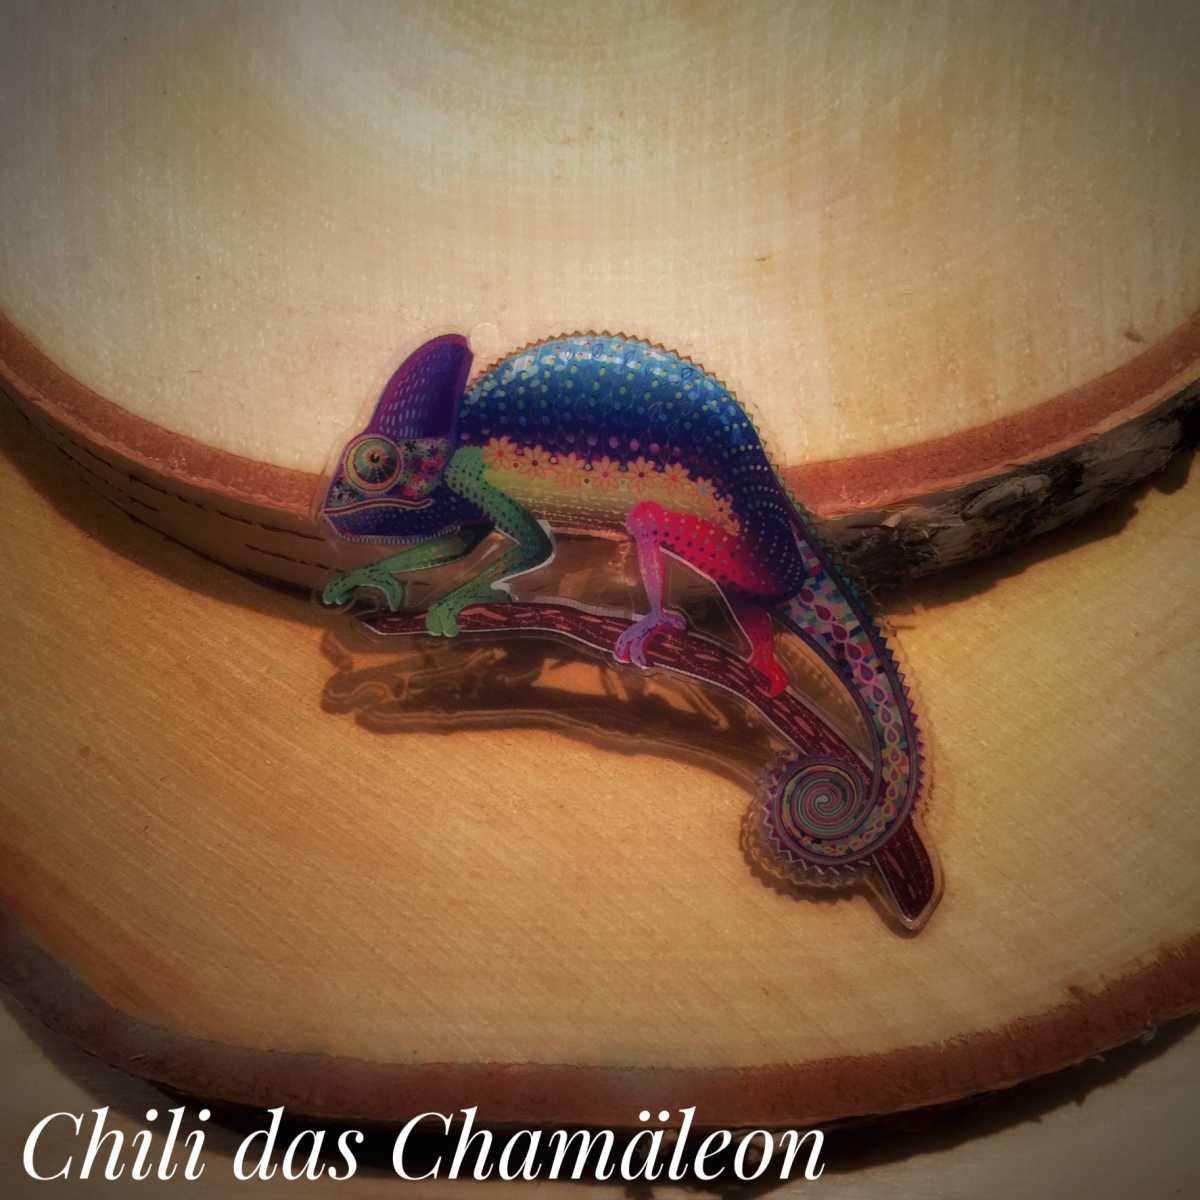 "Chili das Chamäleon"